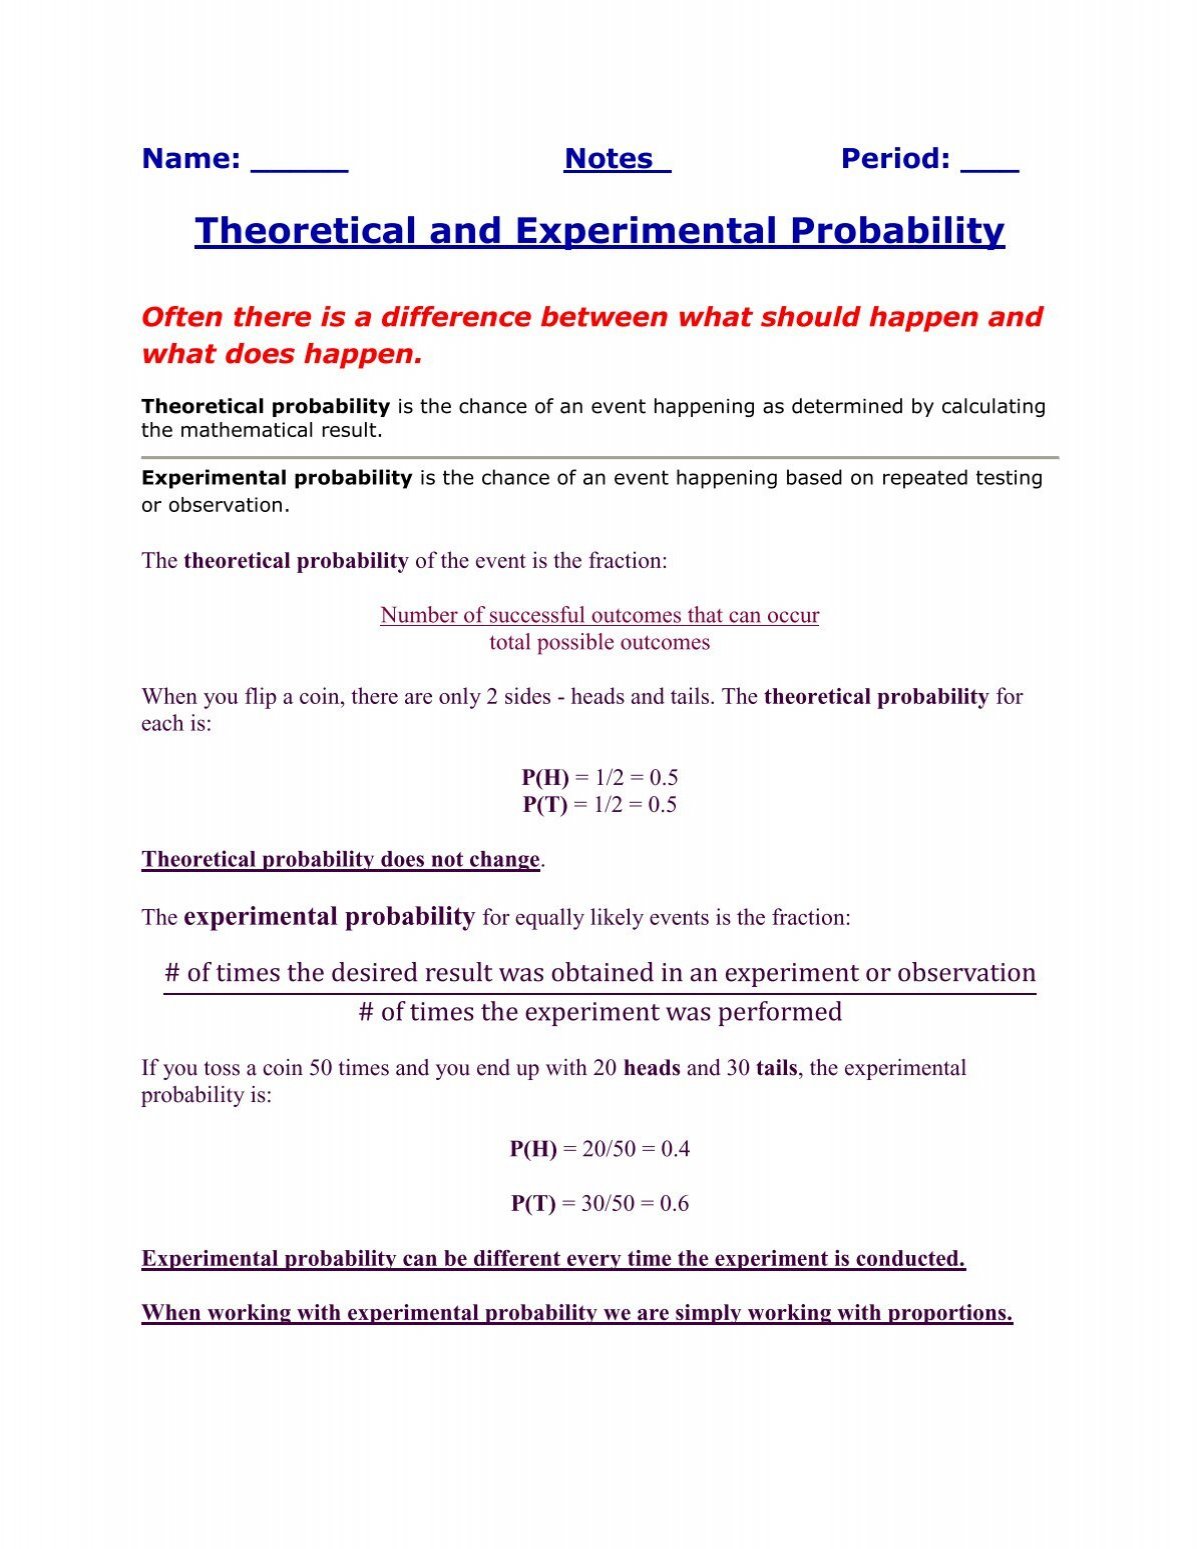 experimental and theoretical probability homework 2